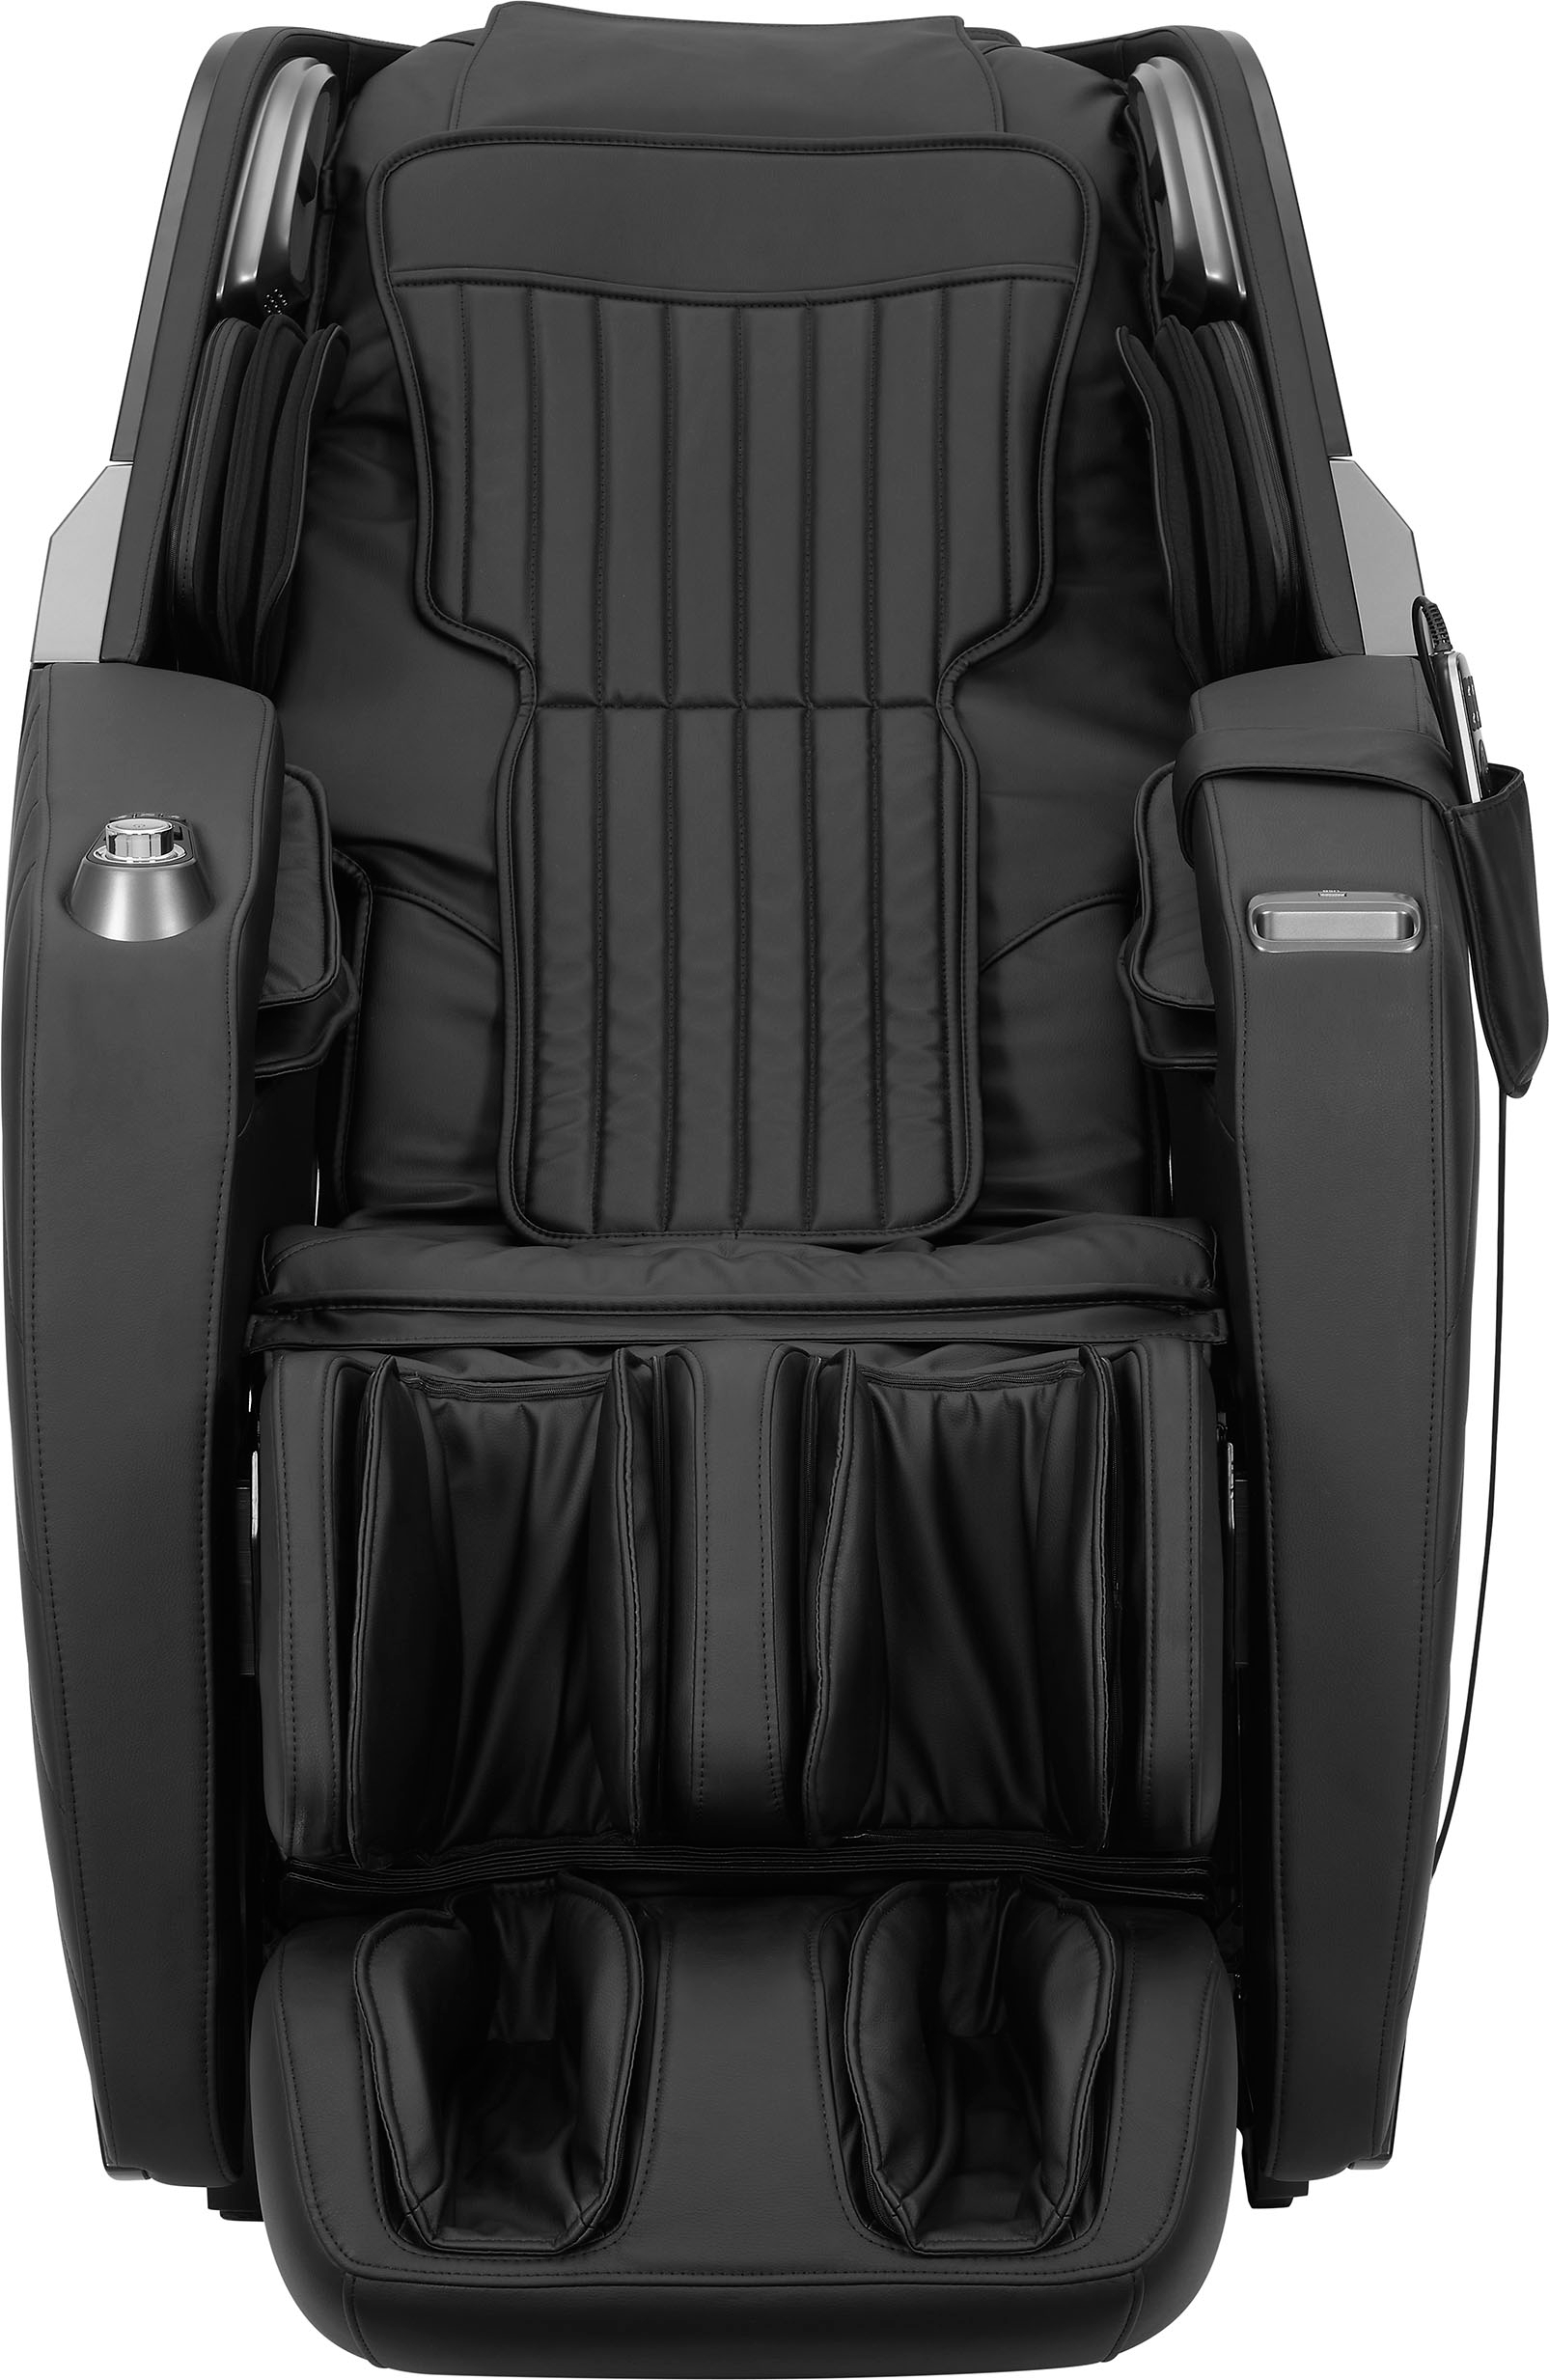 Angle View: Insignia™ - 3D Zero Gravity Full Body Massage Chair - Black